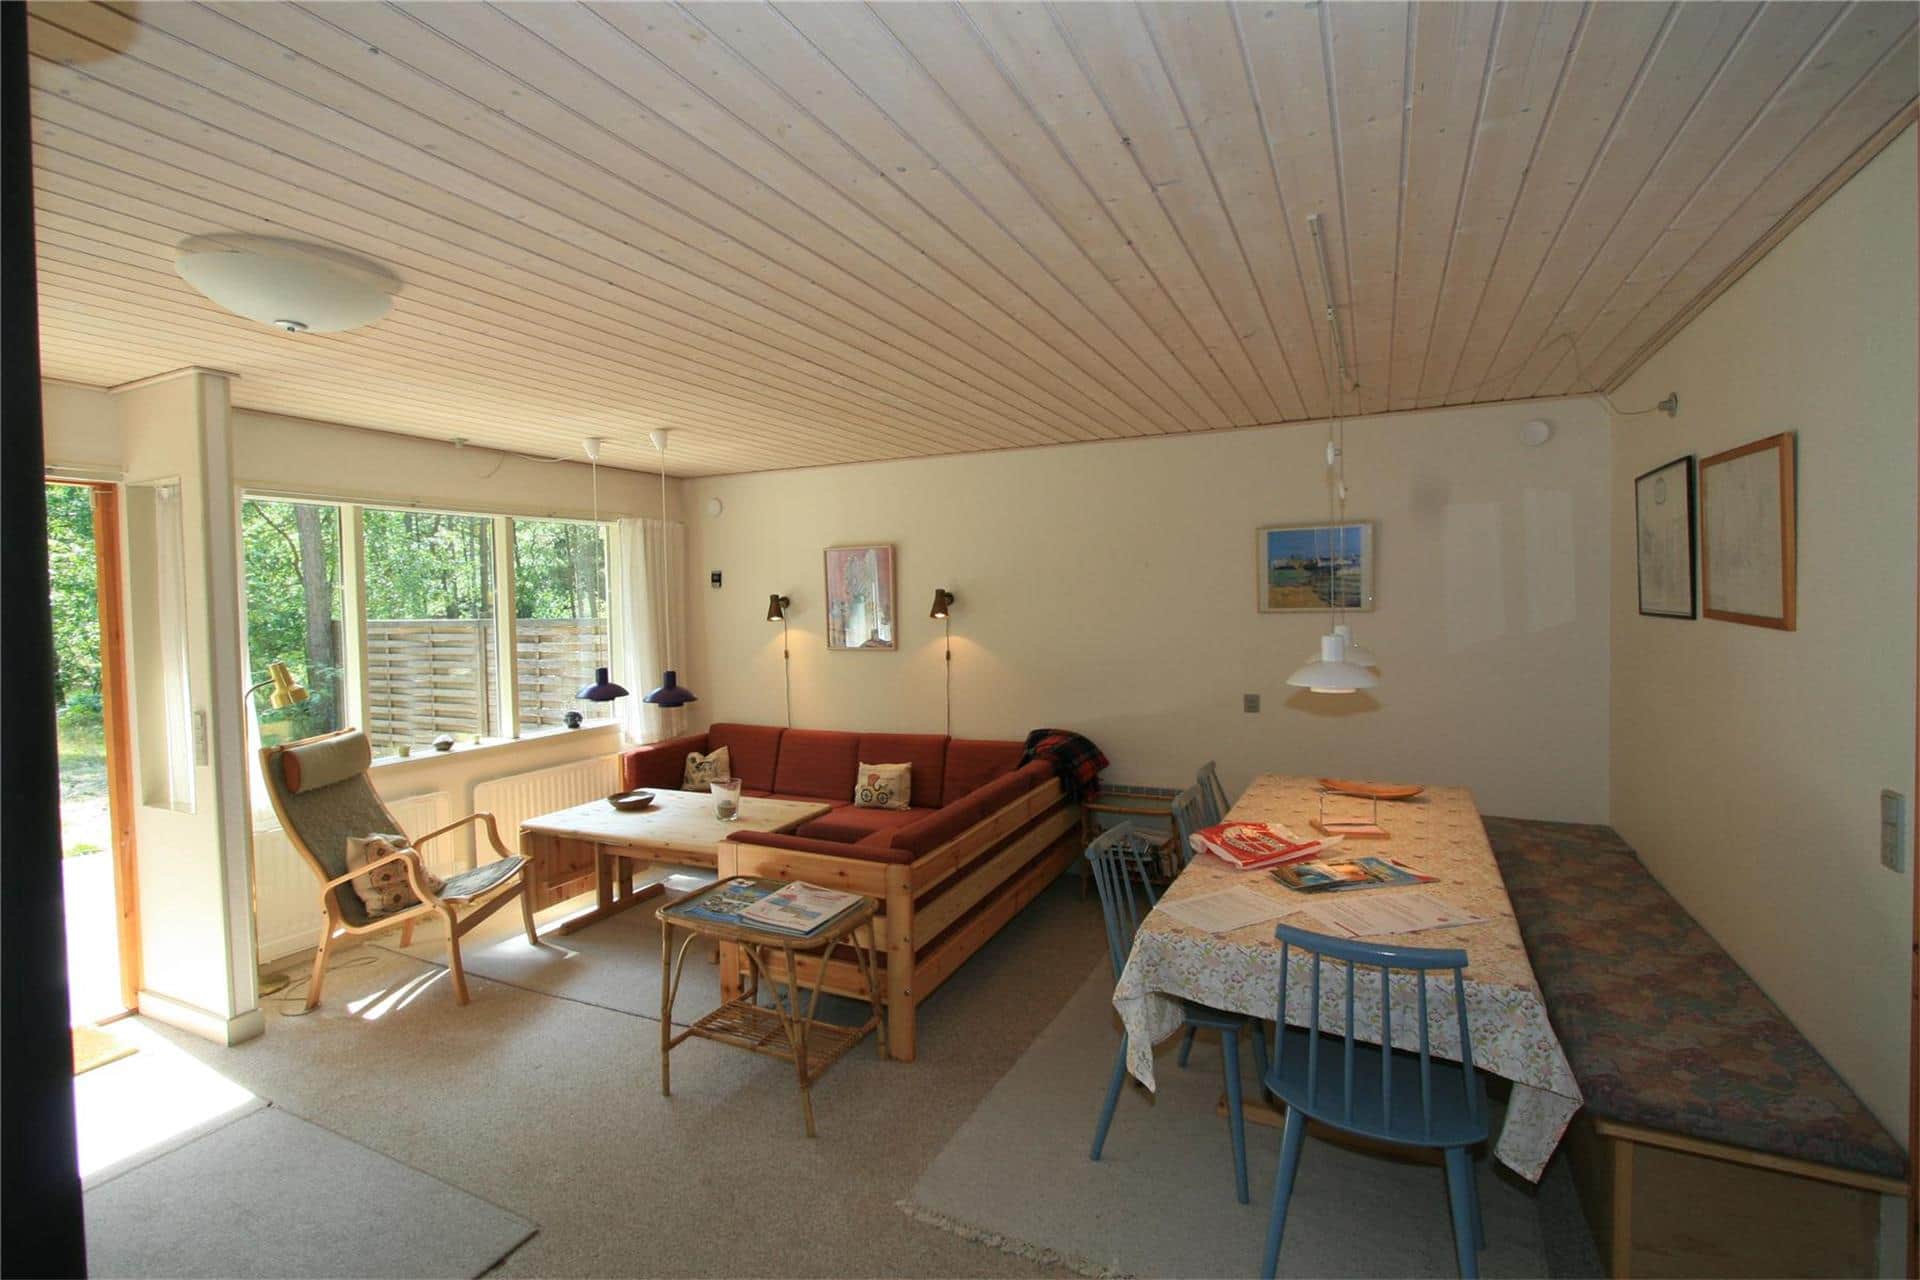 Livingroom 1 Image 1-10 Holiday-home 4716, Boderne 95, DK - 3720 Aakirkeby